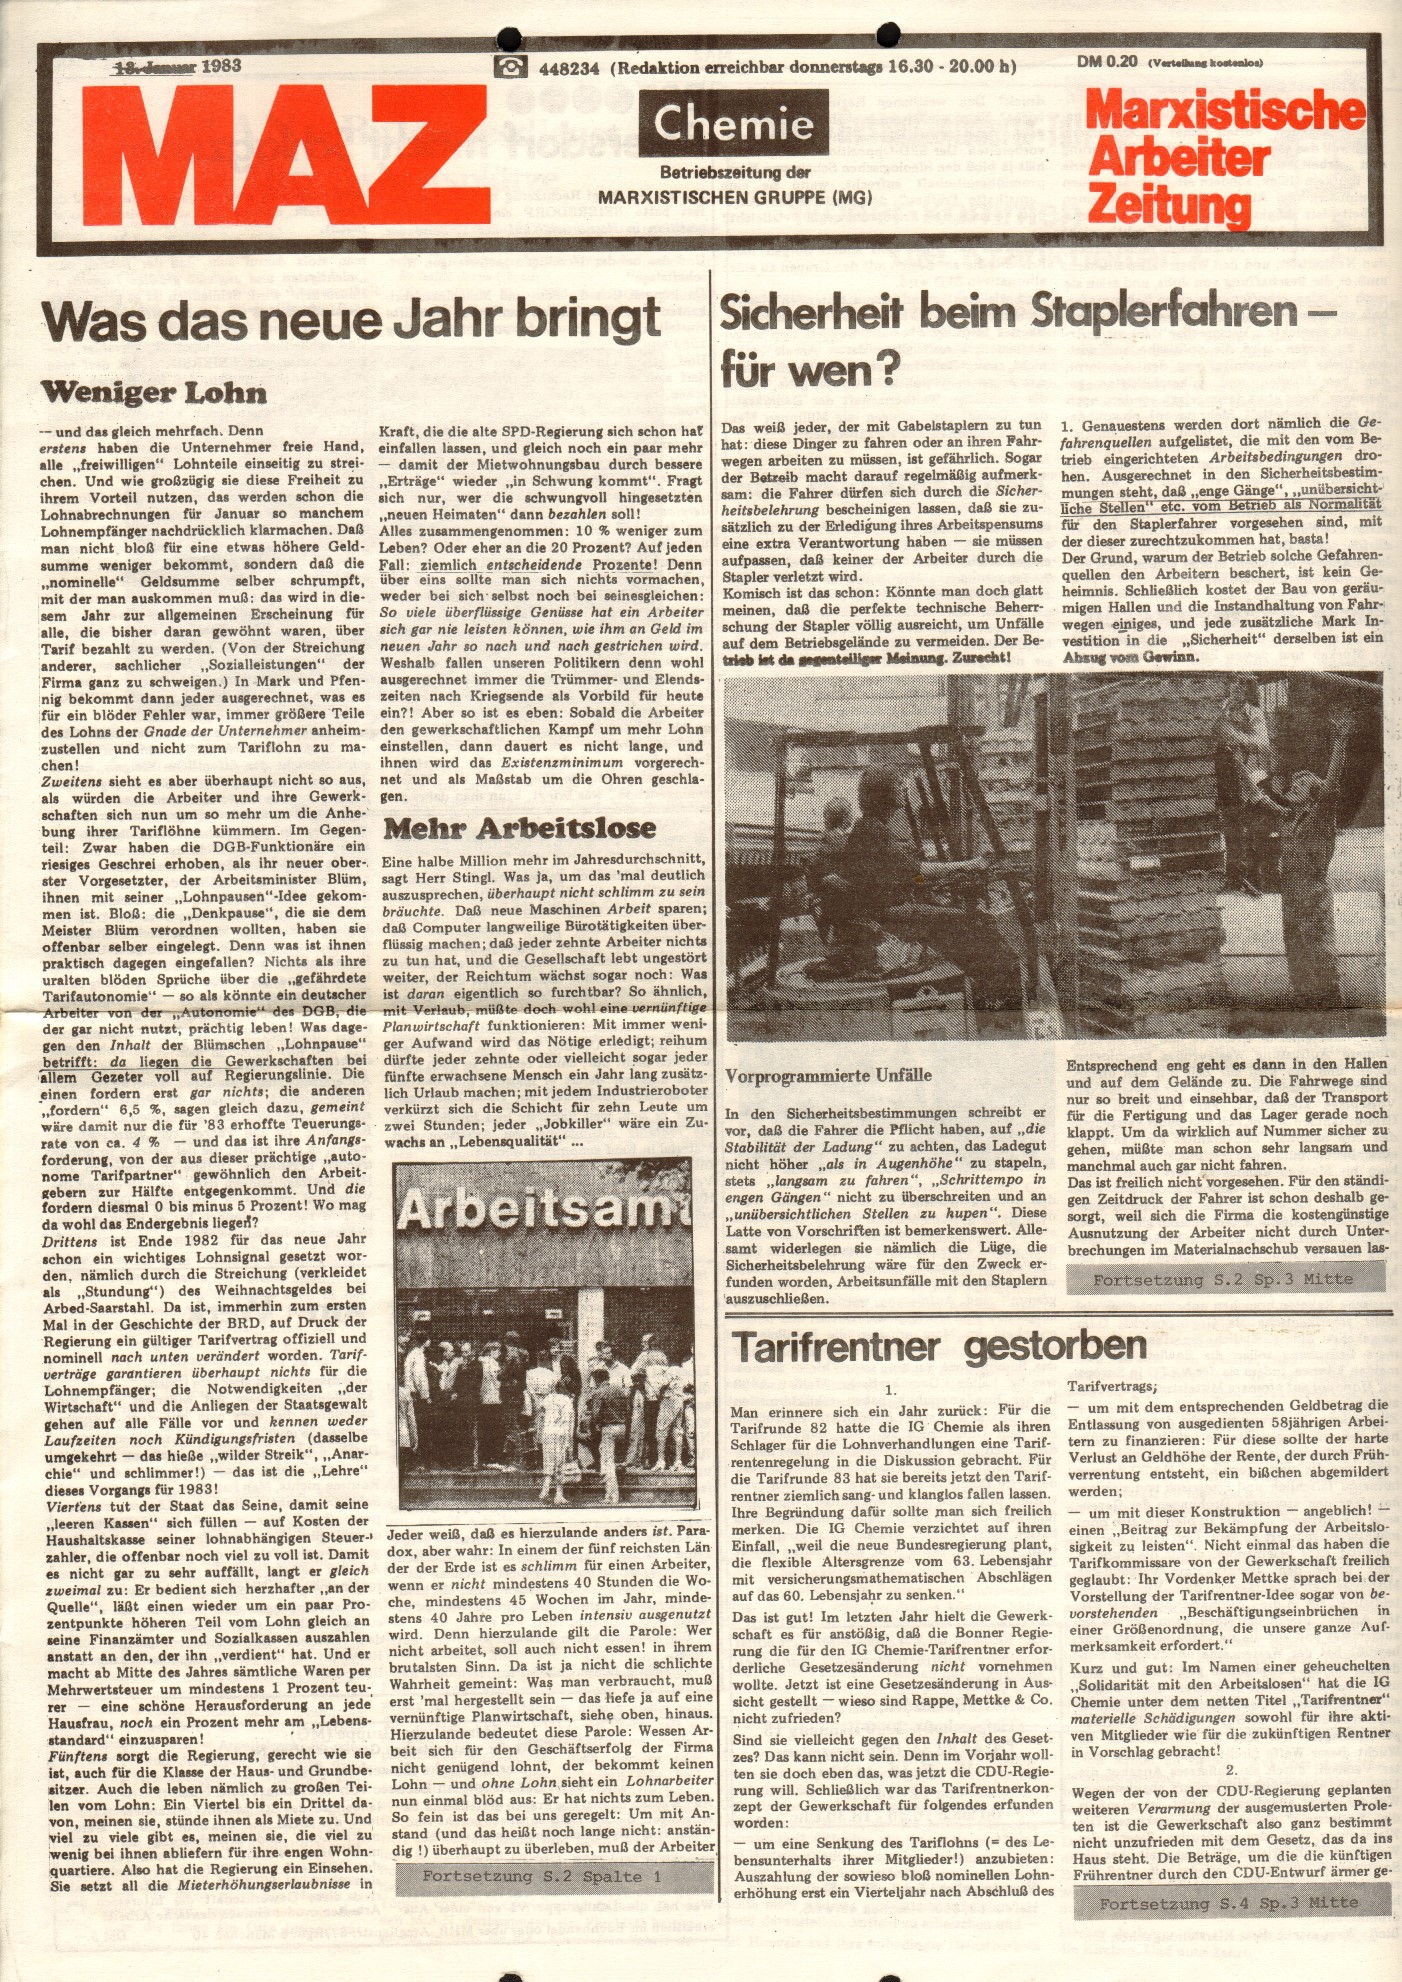 Hamburg_MG_MAZ_Chemie_19830113_01